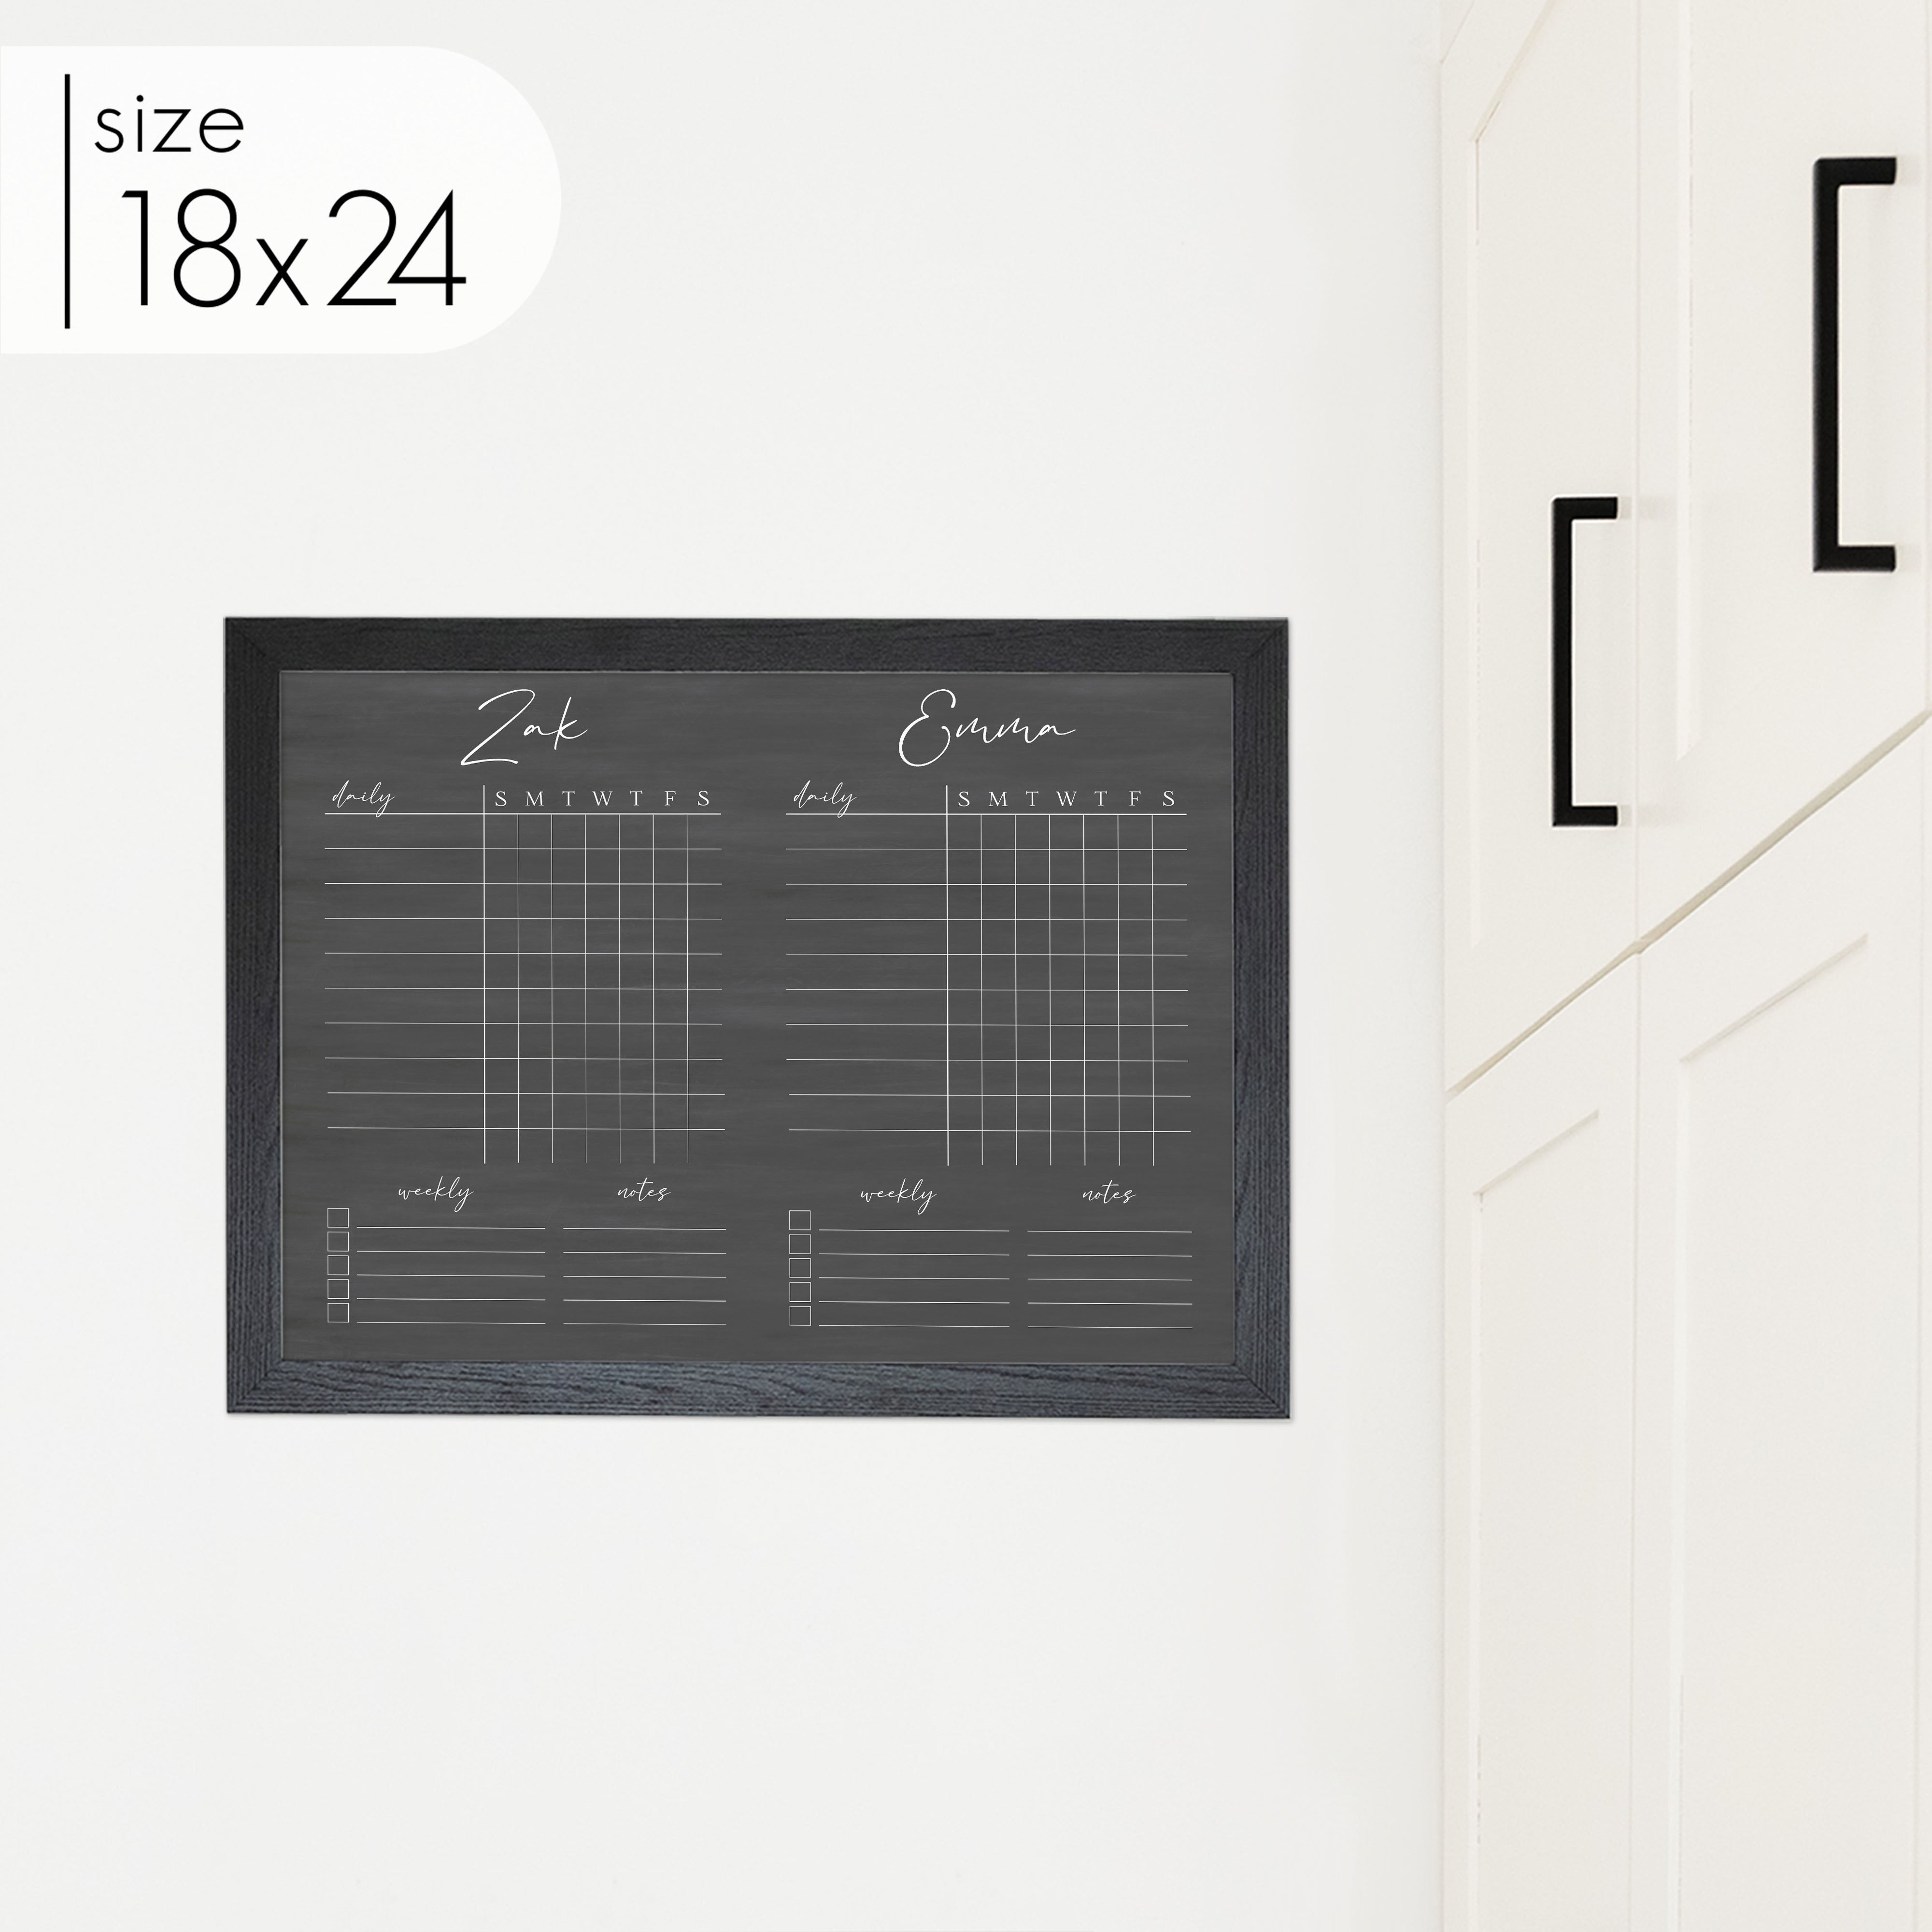 2 Person Framed Chalkboard Chore Chart  | Horizontal Pennington